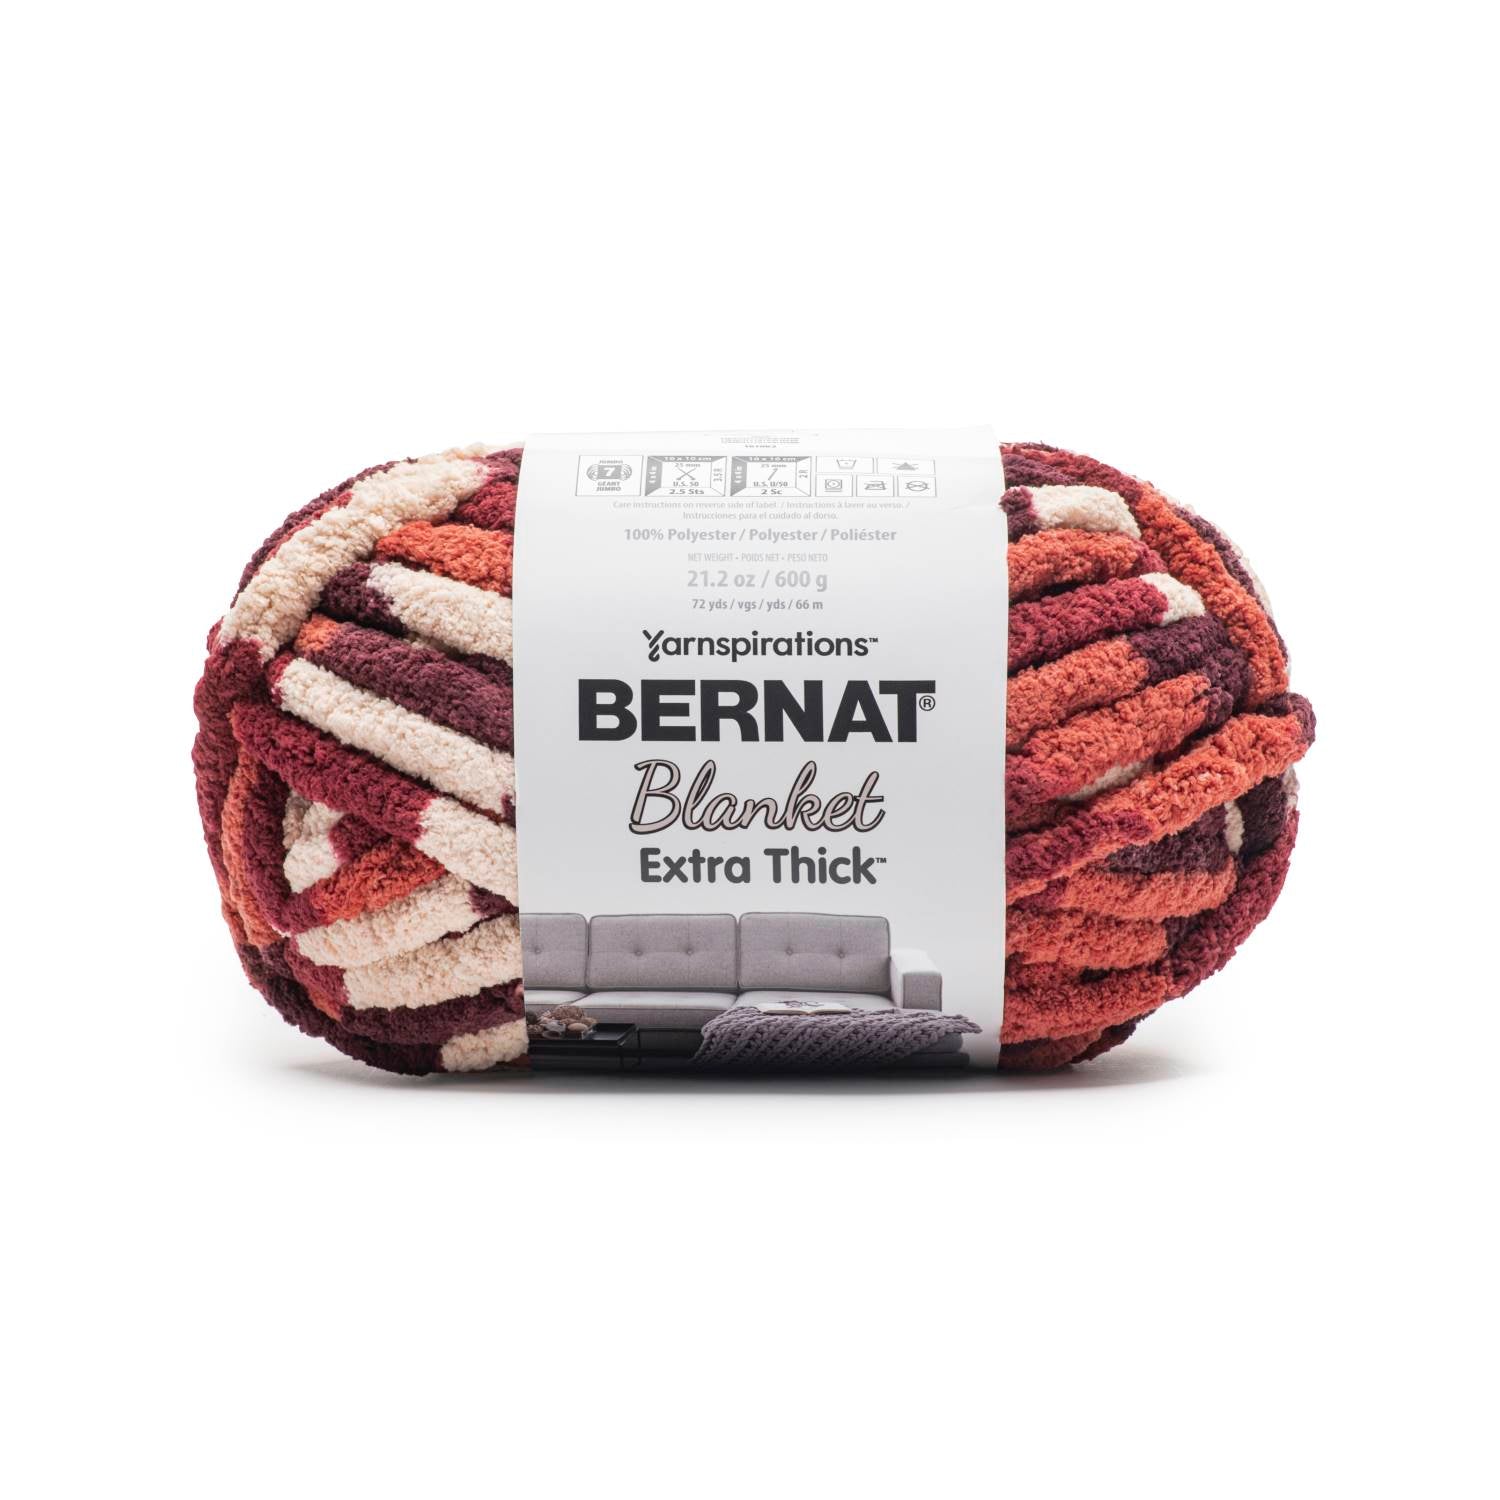 Bernat Blanket Extra Thick Yarn (600g/21.2oz) - Discontinued Shades Ruby